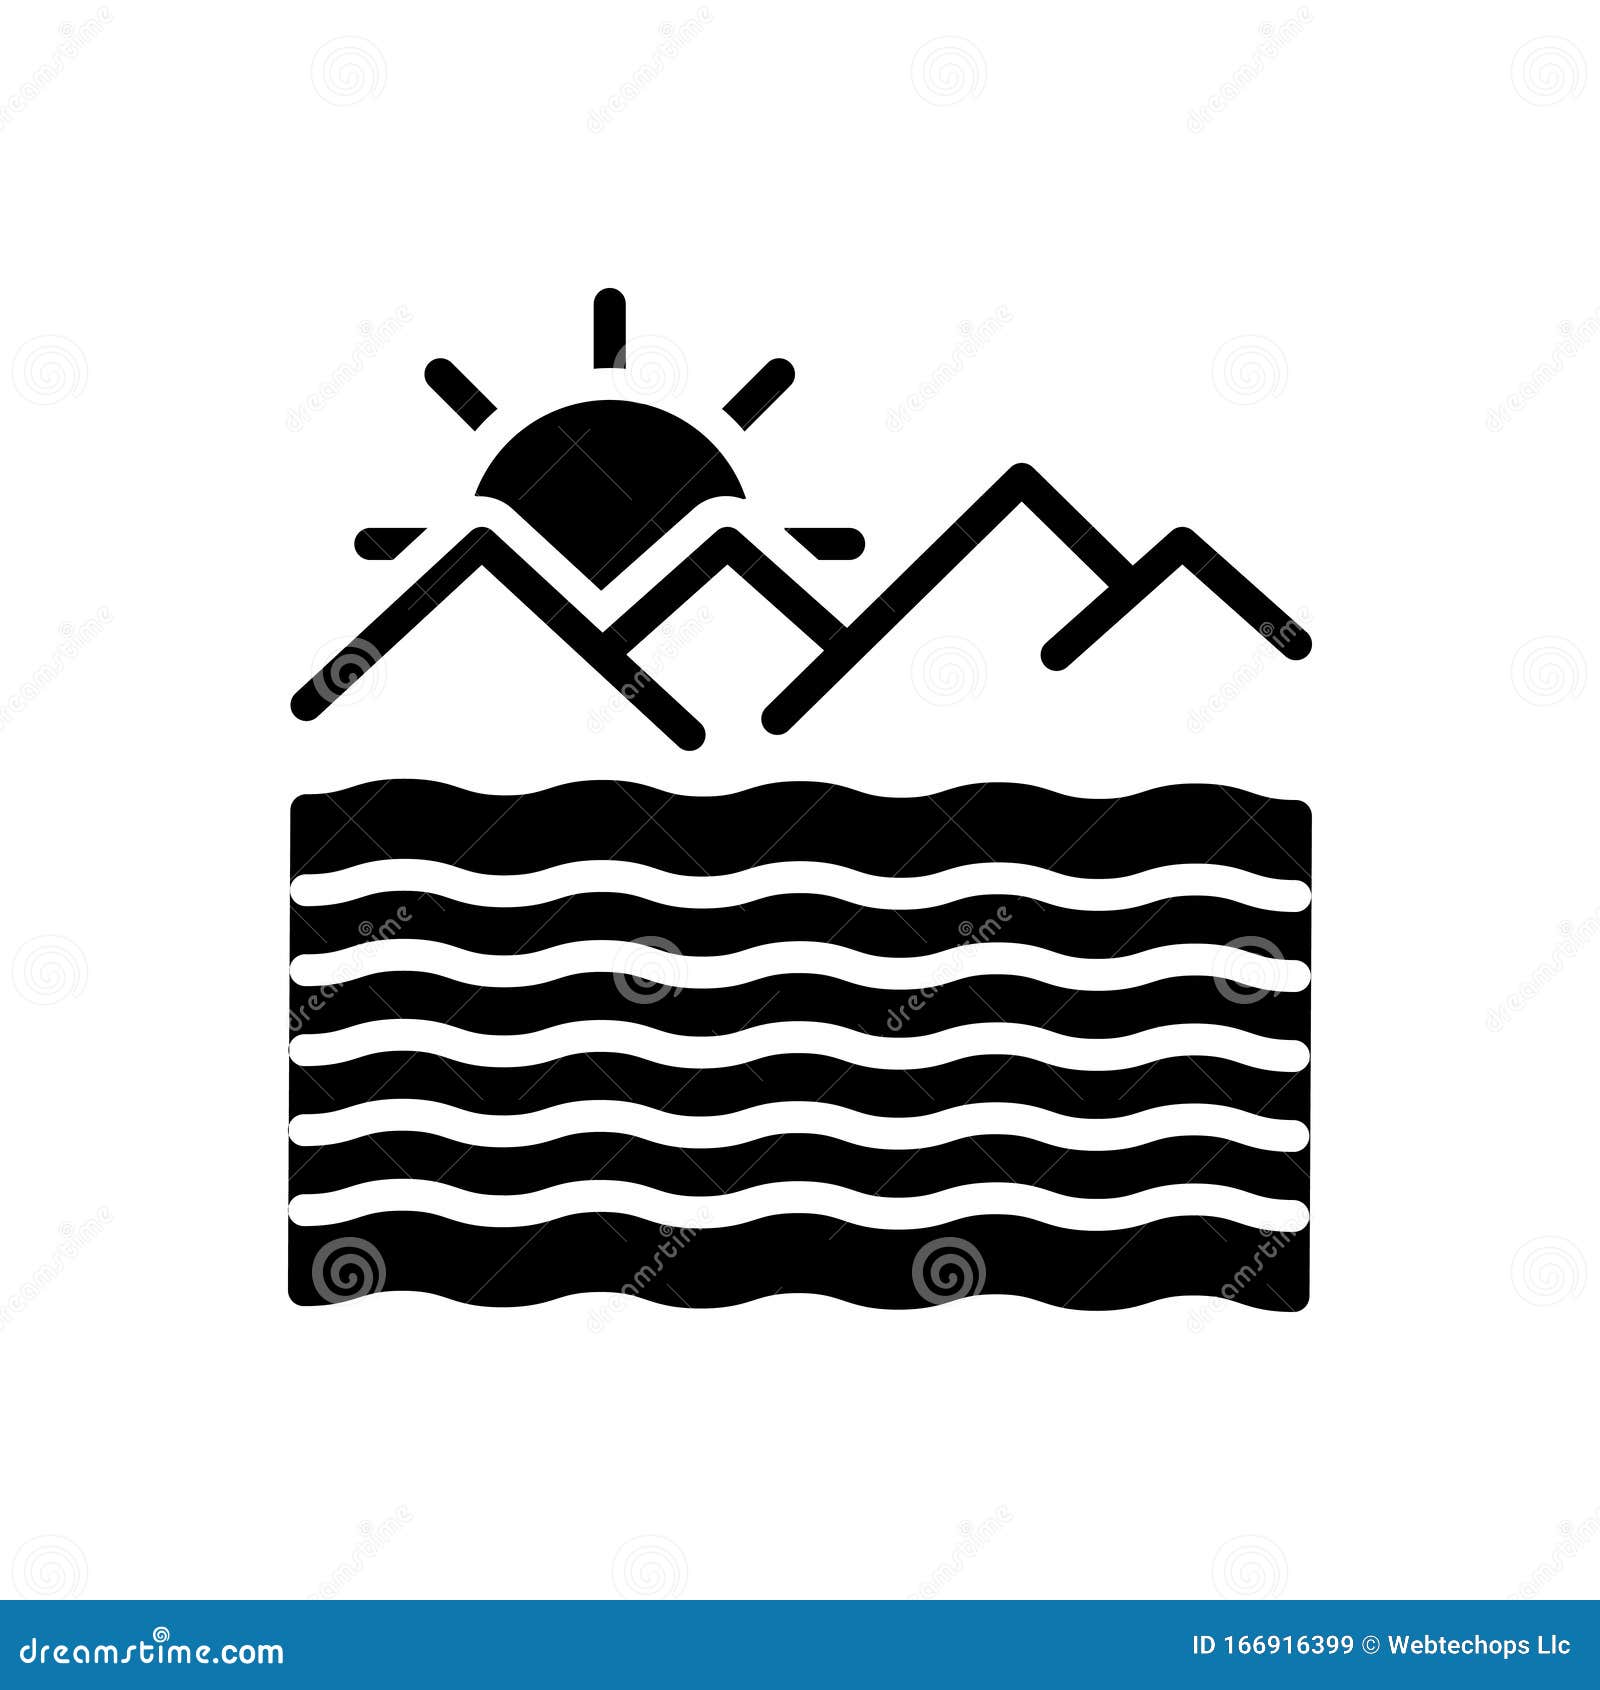 black solid icon for ocean, briny and sea